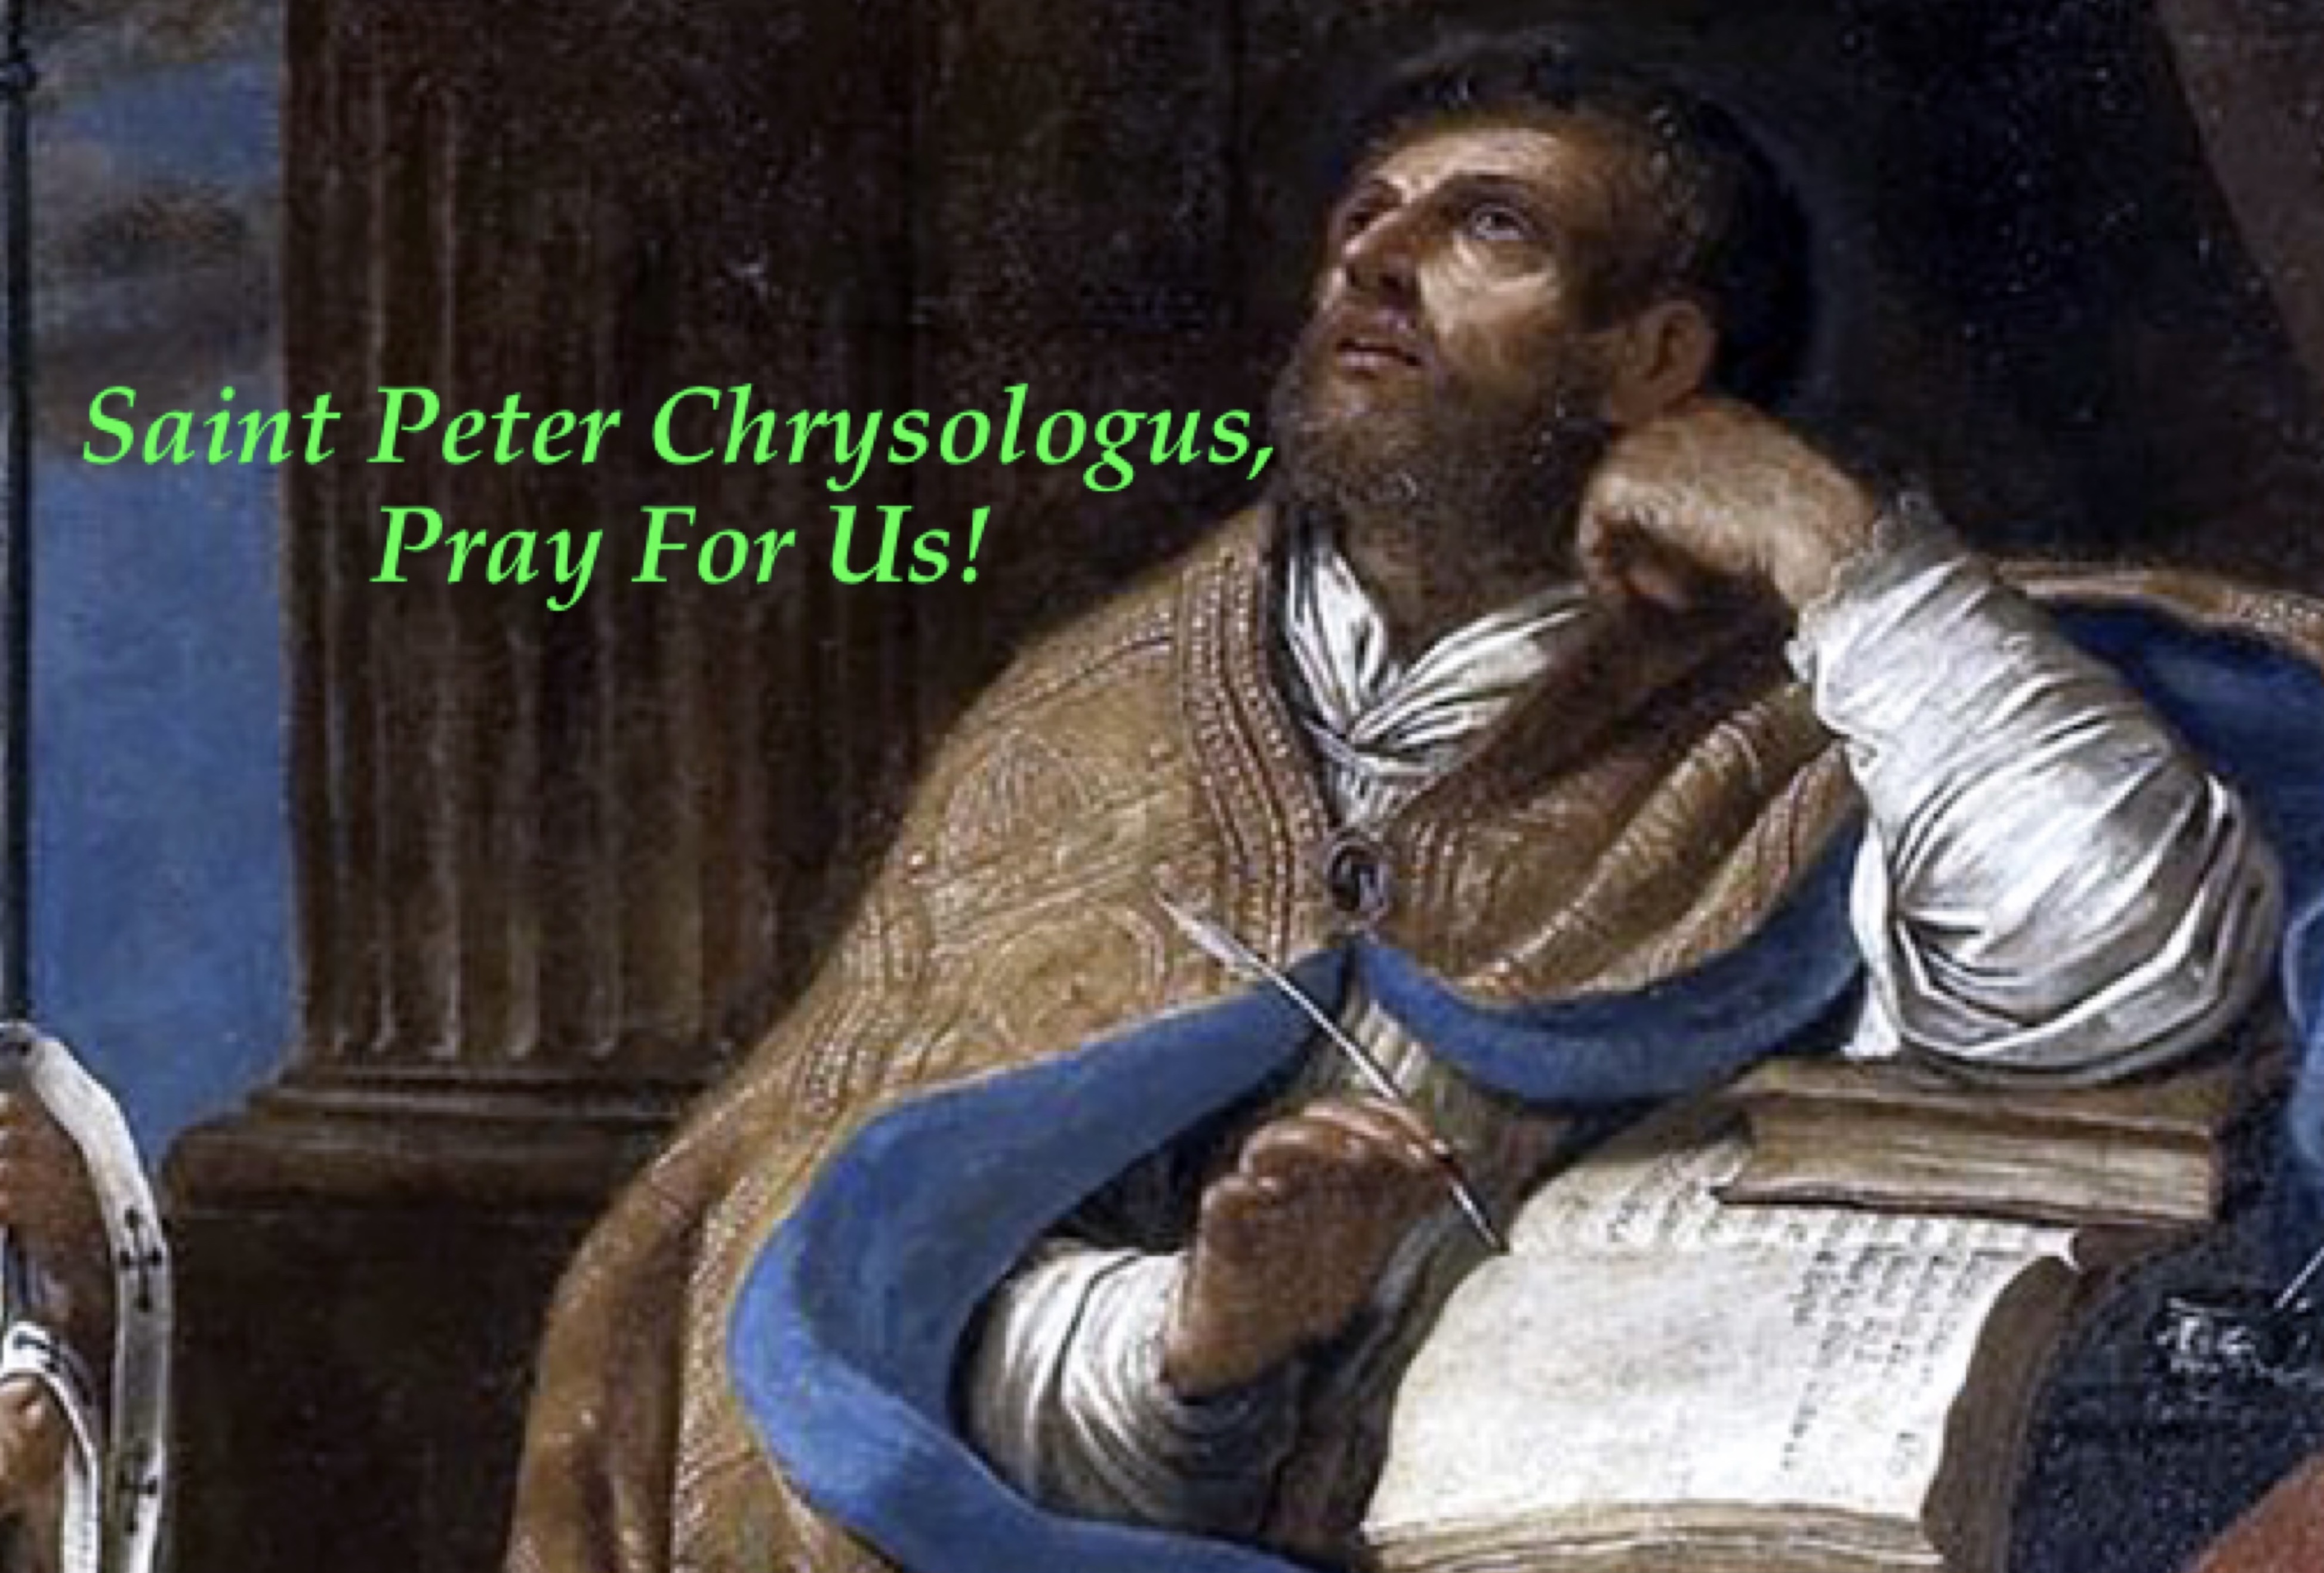 5th November - Saint Peter Chrysologus